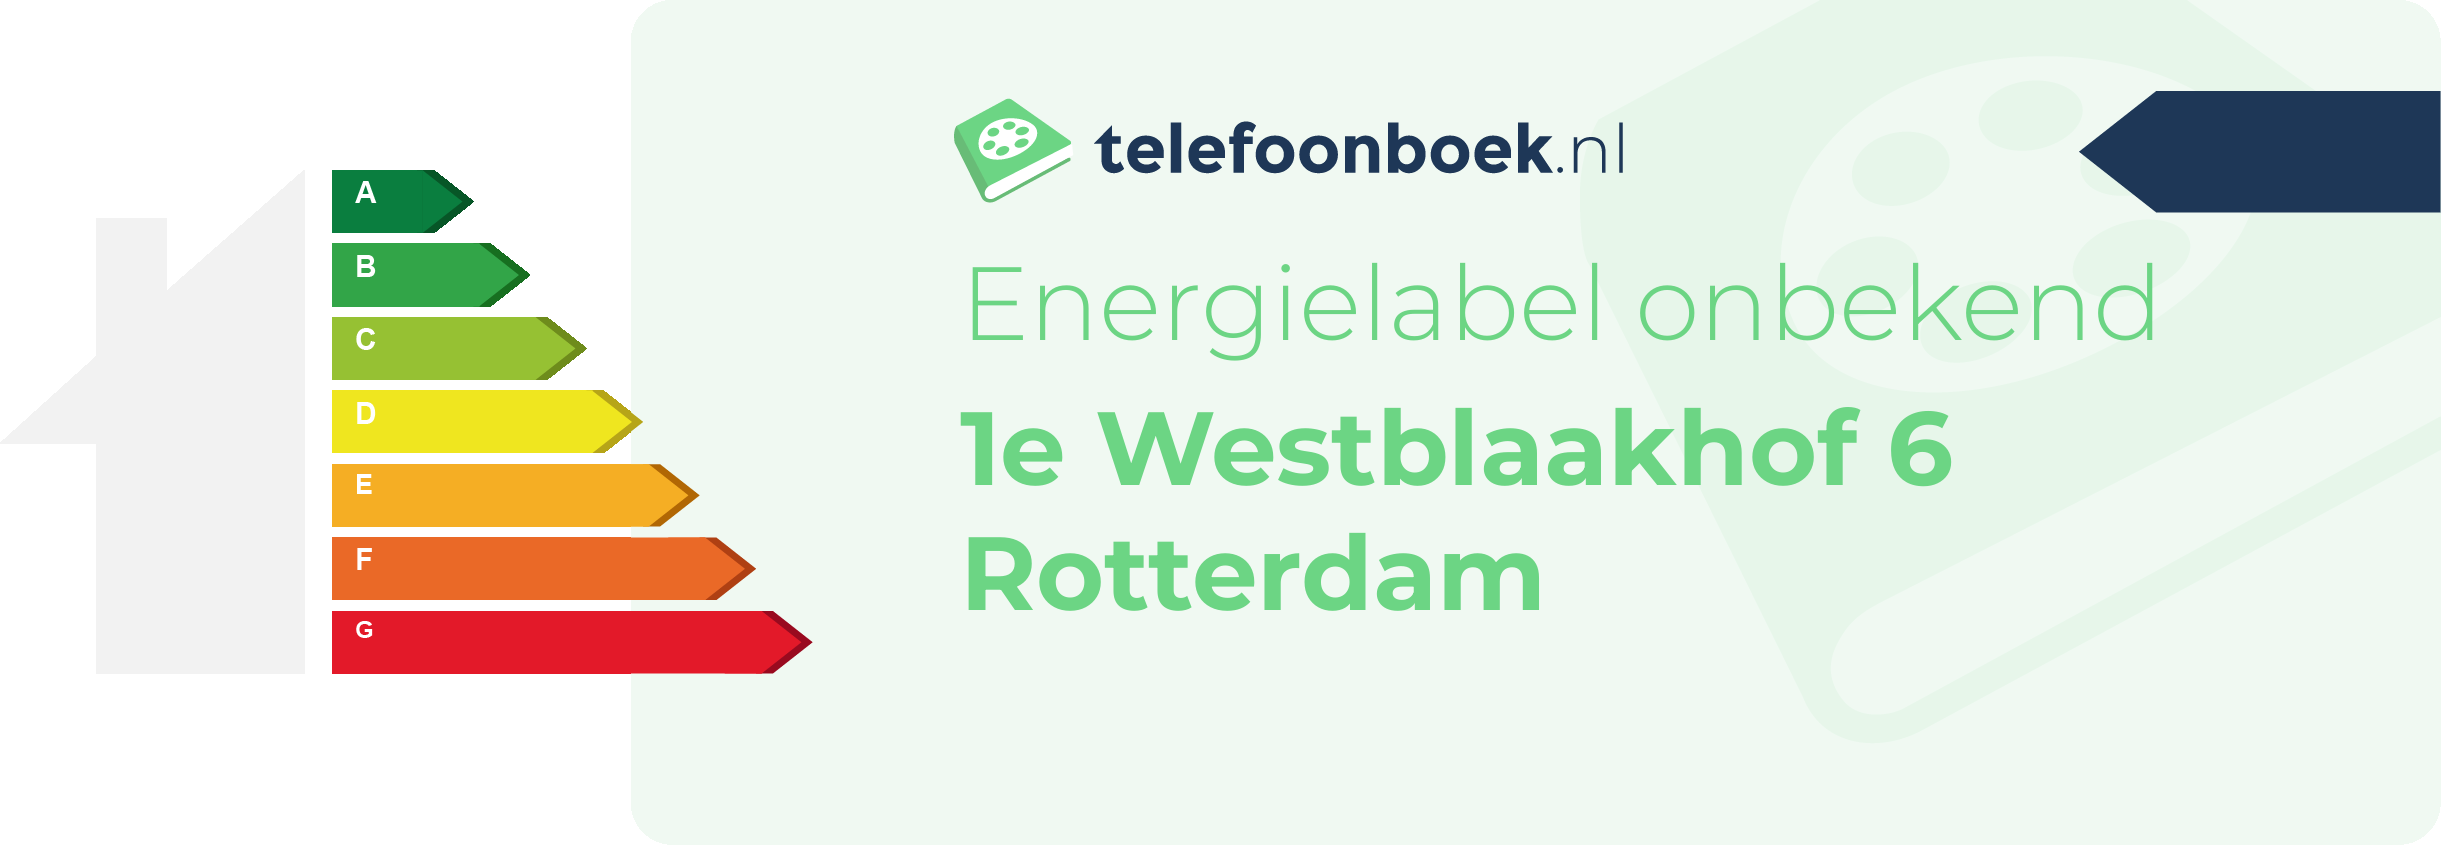 Energielabel 1e Westblaakhof 6 Rotterdam